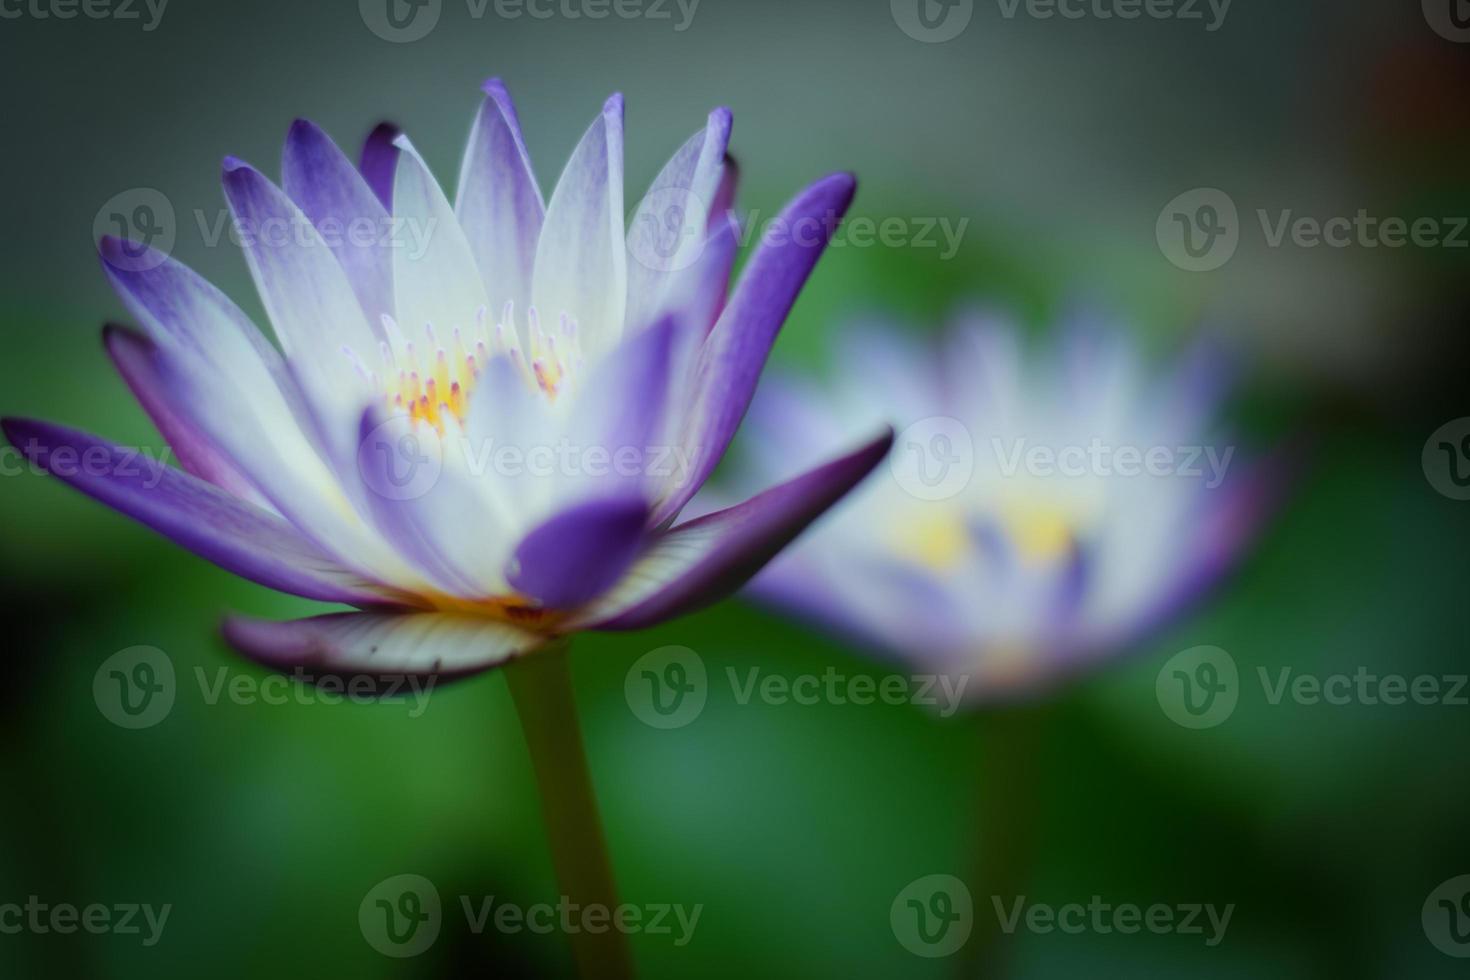 hermoso nenúfar o flor de loto en el lago foto